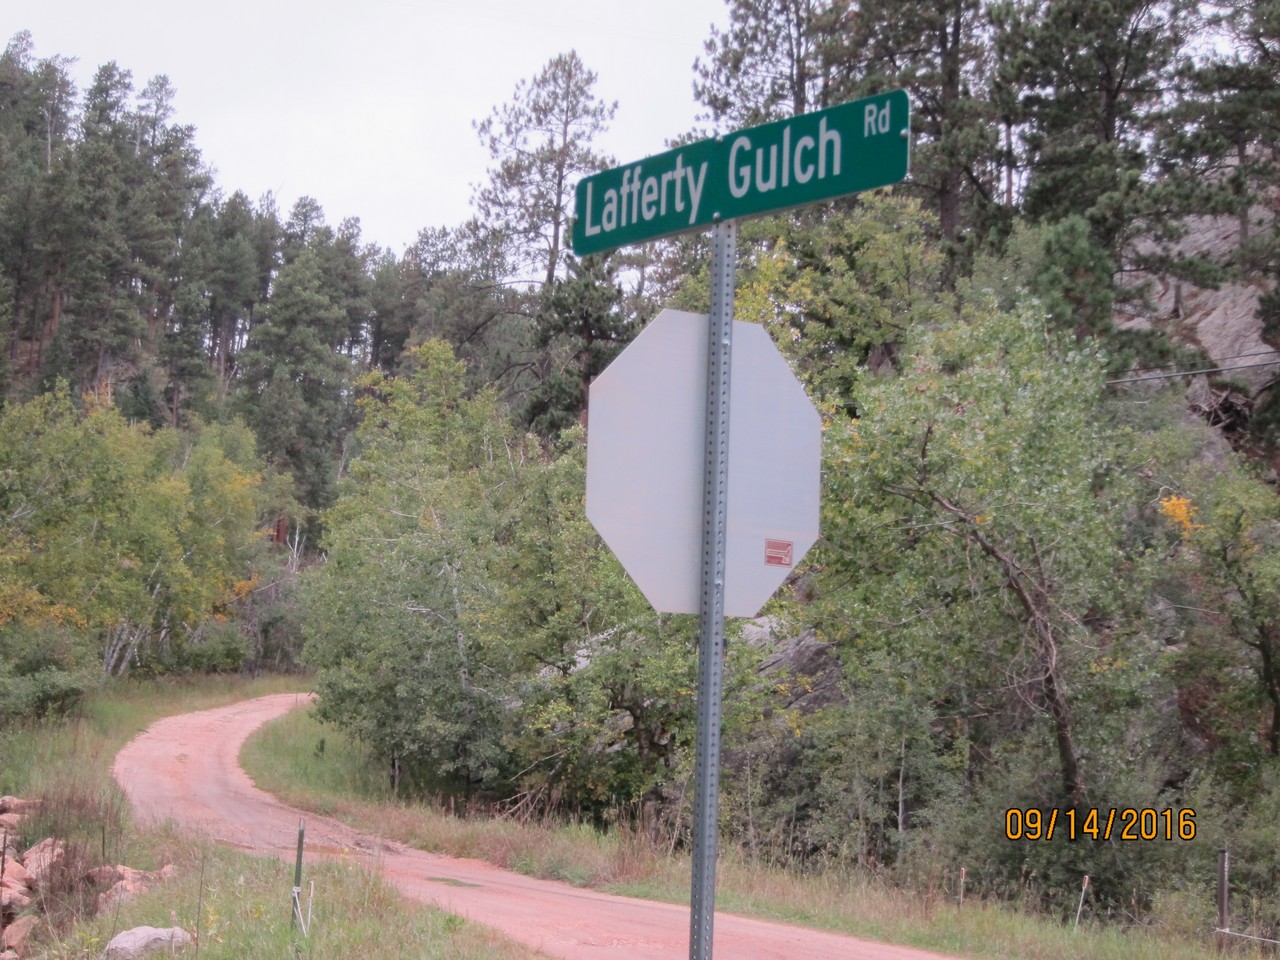 Lafferty Gulch Road